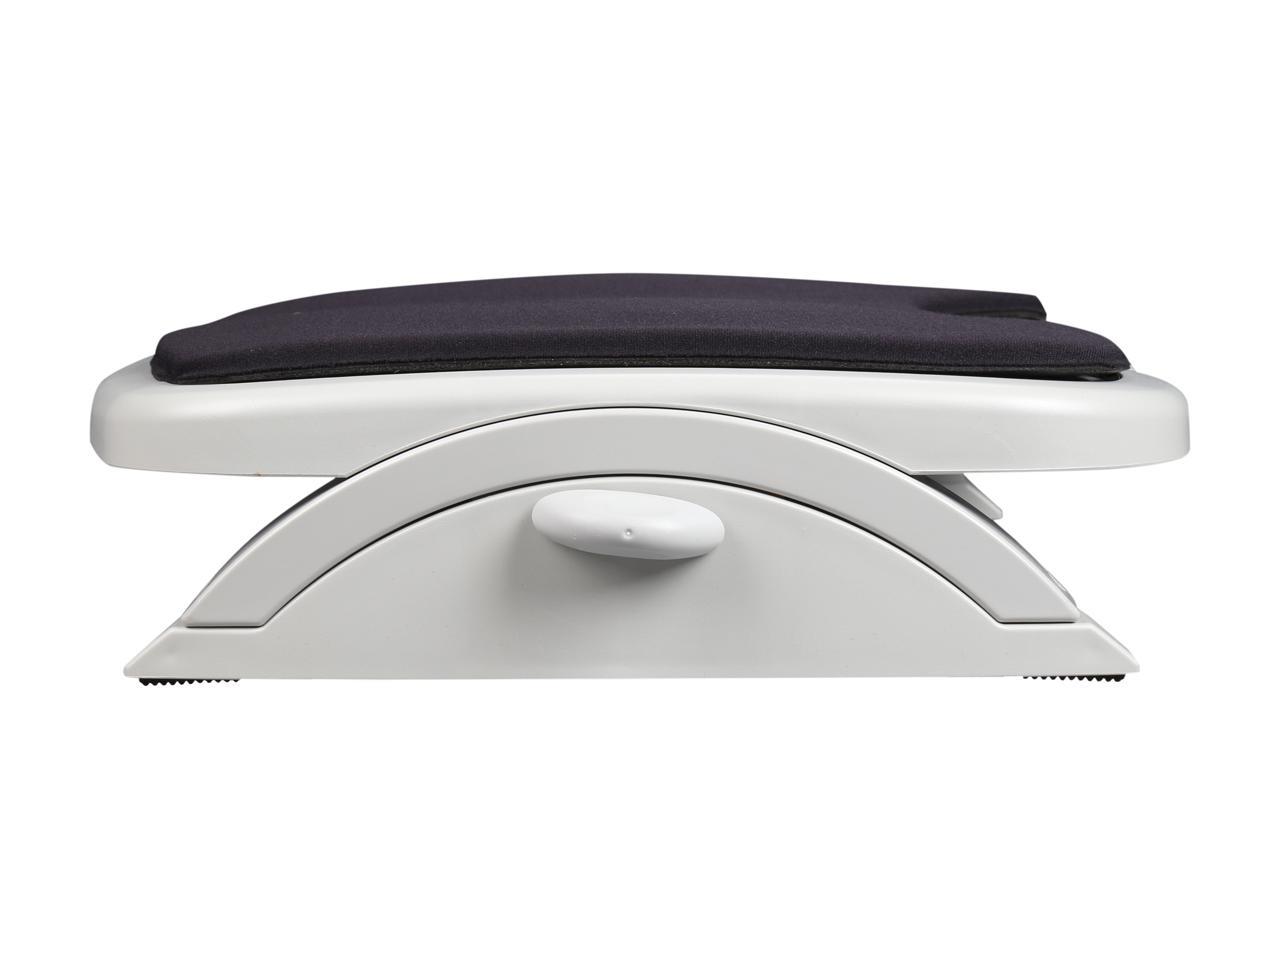 Kensington Solemate Comfort Footrest with SmartFit System, 21.5"L x 4.6"W x 14"H, Gray/Black